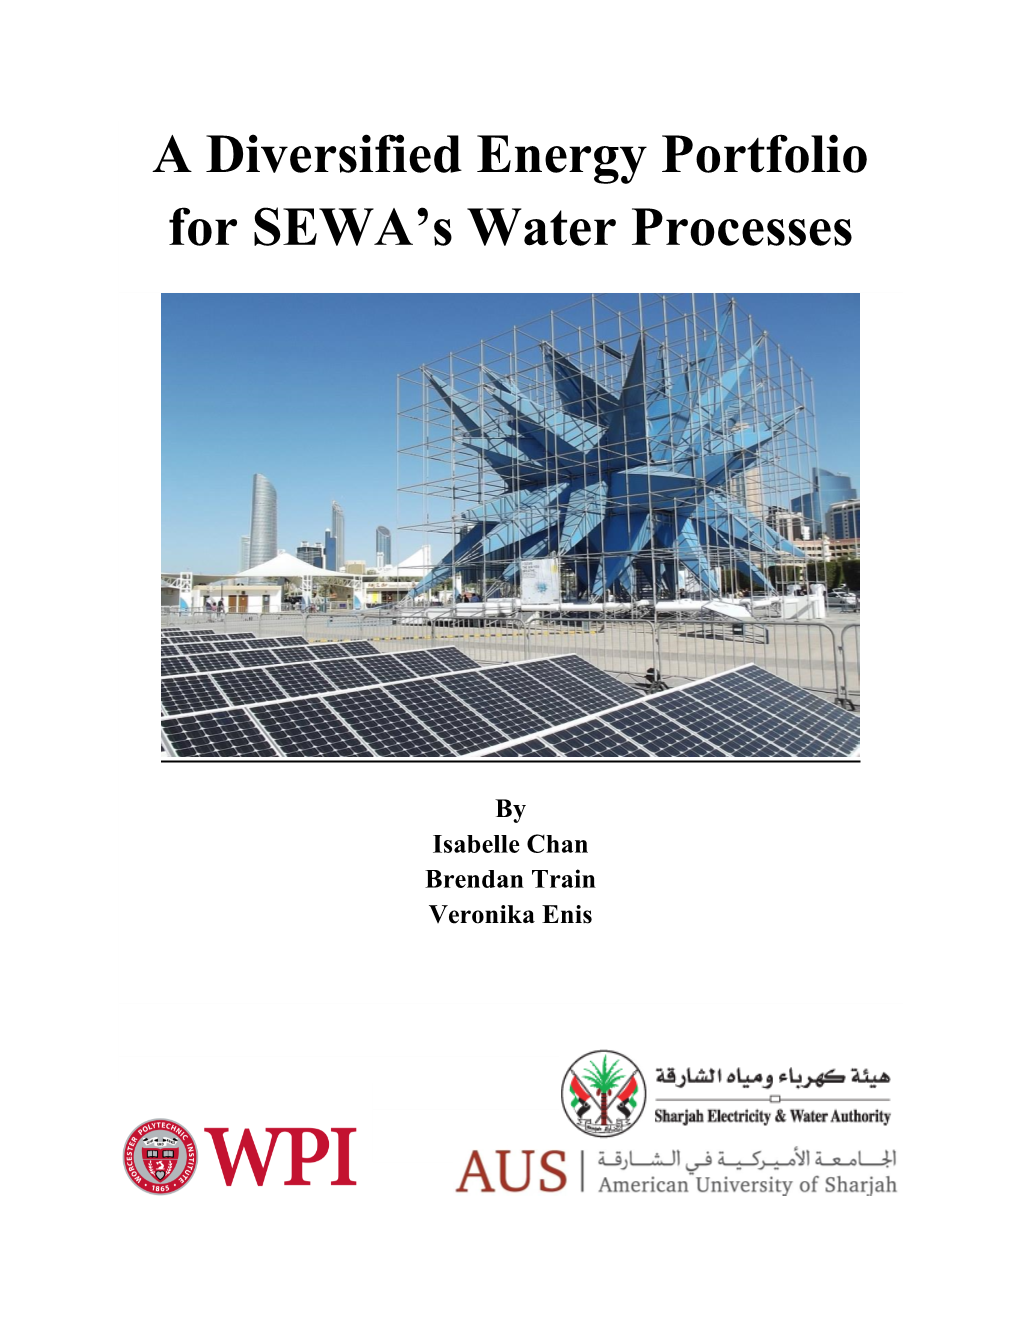 A Diversified Energy Portfolio for SEWA's Water Processes